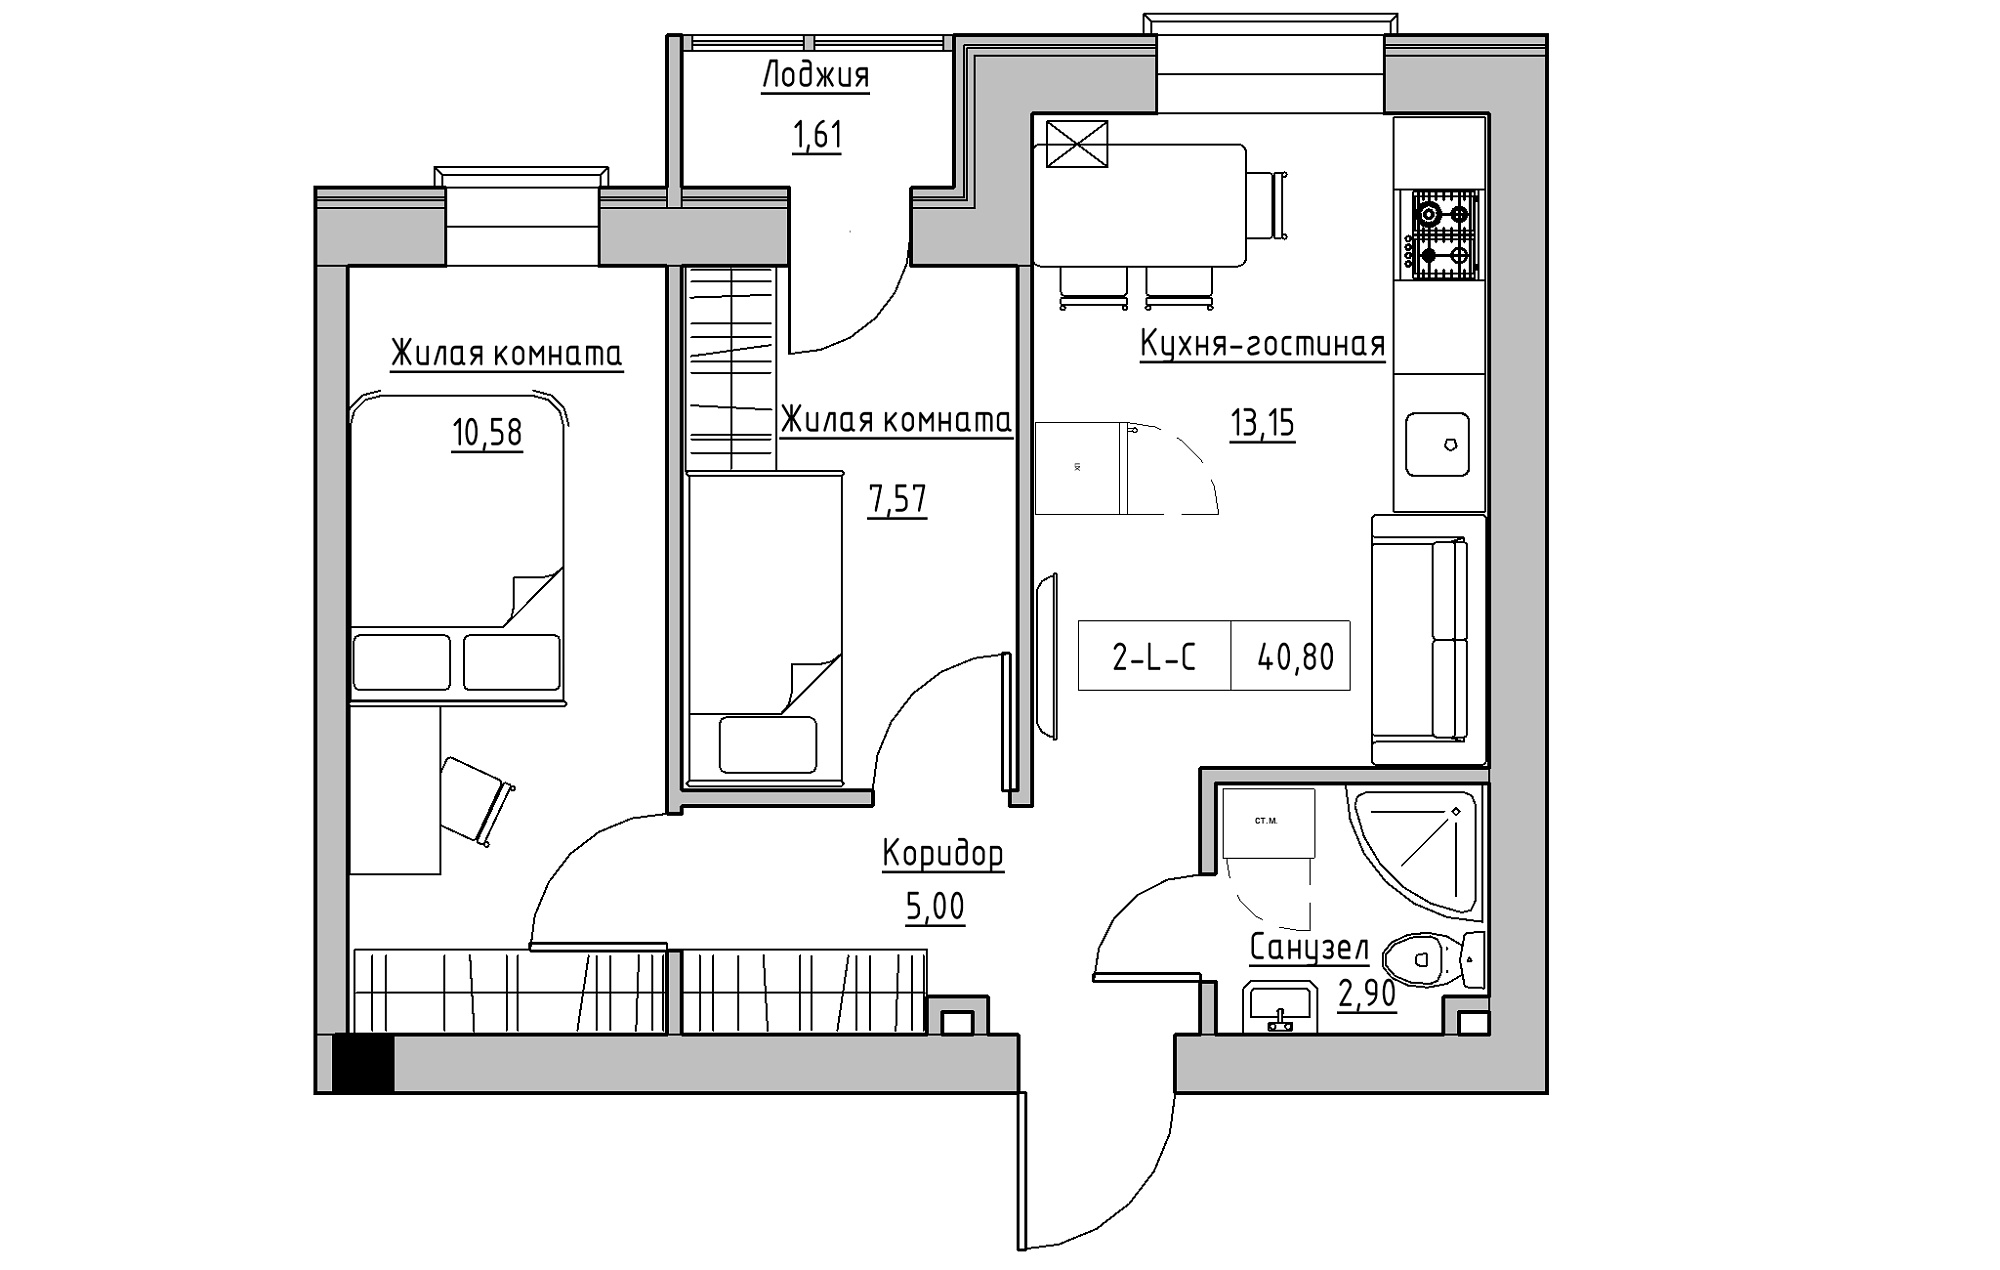 Planning 2-rm flats area 40.8m2, KS-018-01/0005.